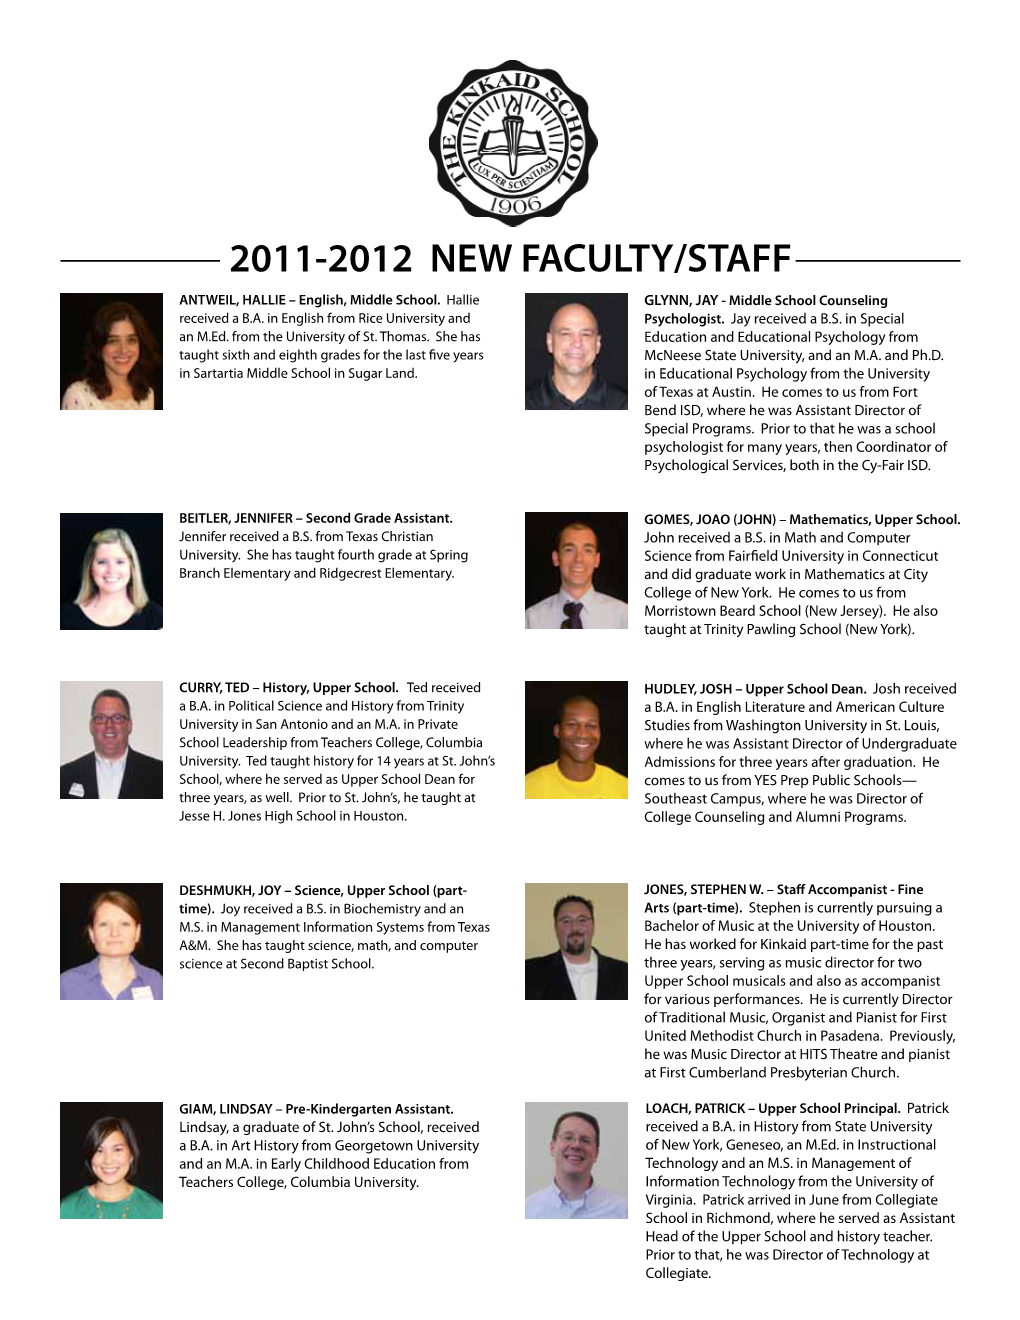 2011-2012 NEW FACULTY/STAFF ANTWEIL, HALLIE – English, Middle School